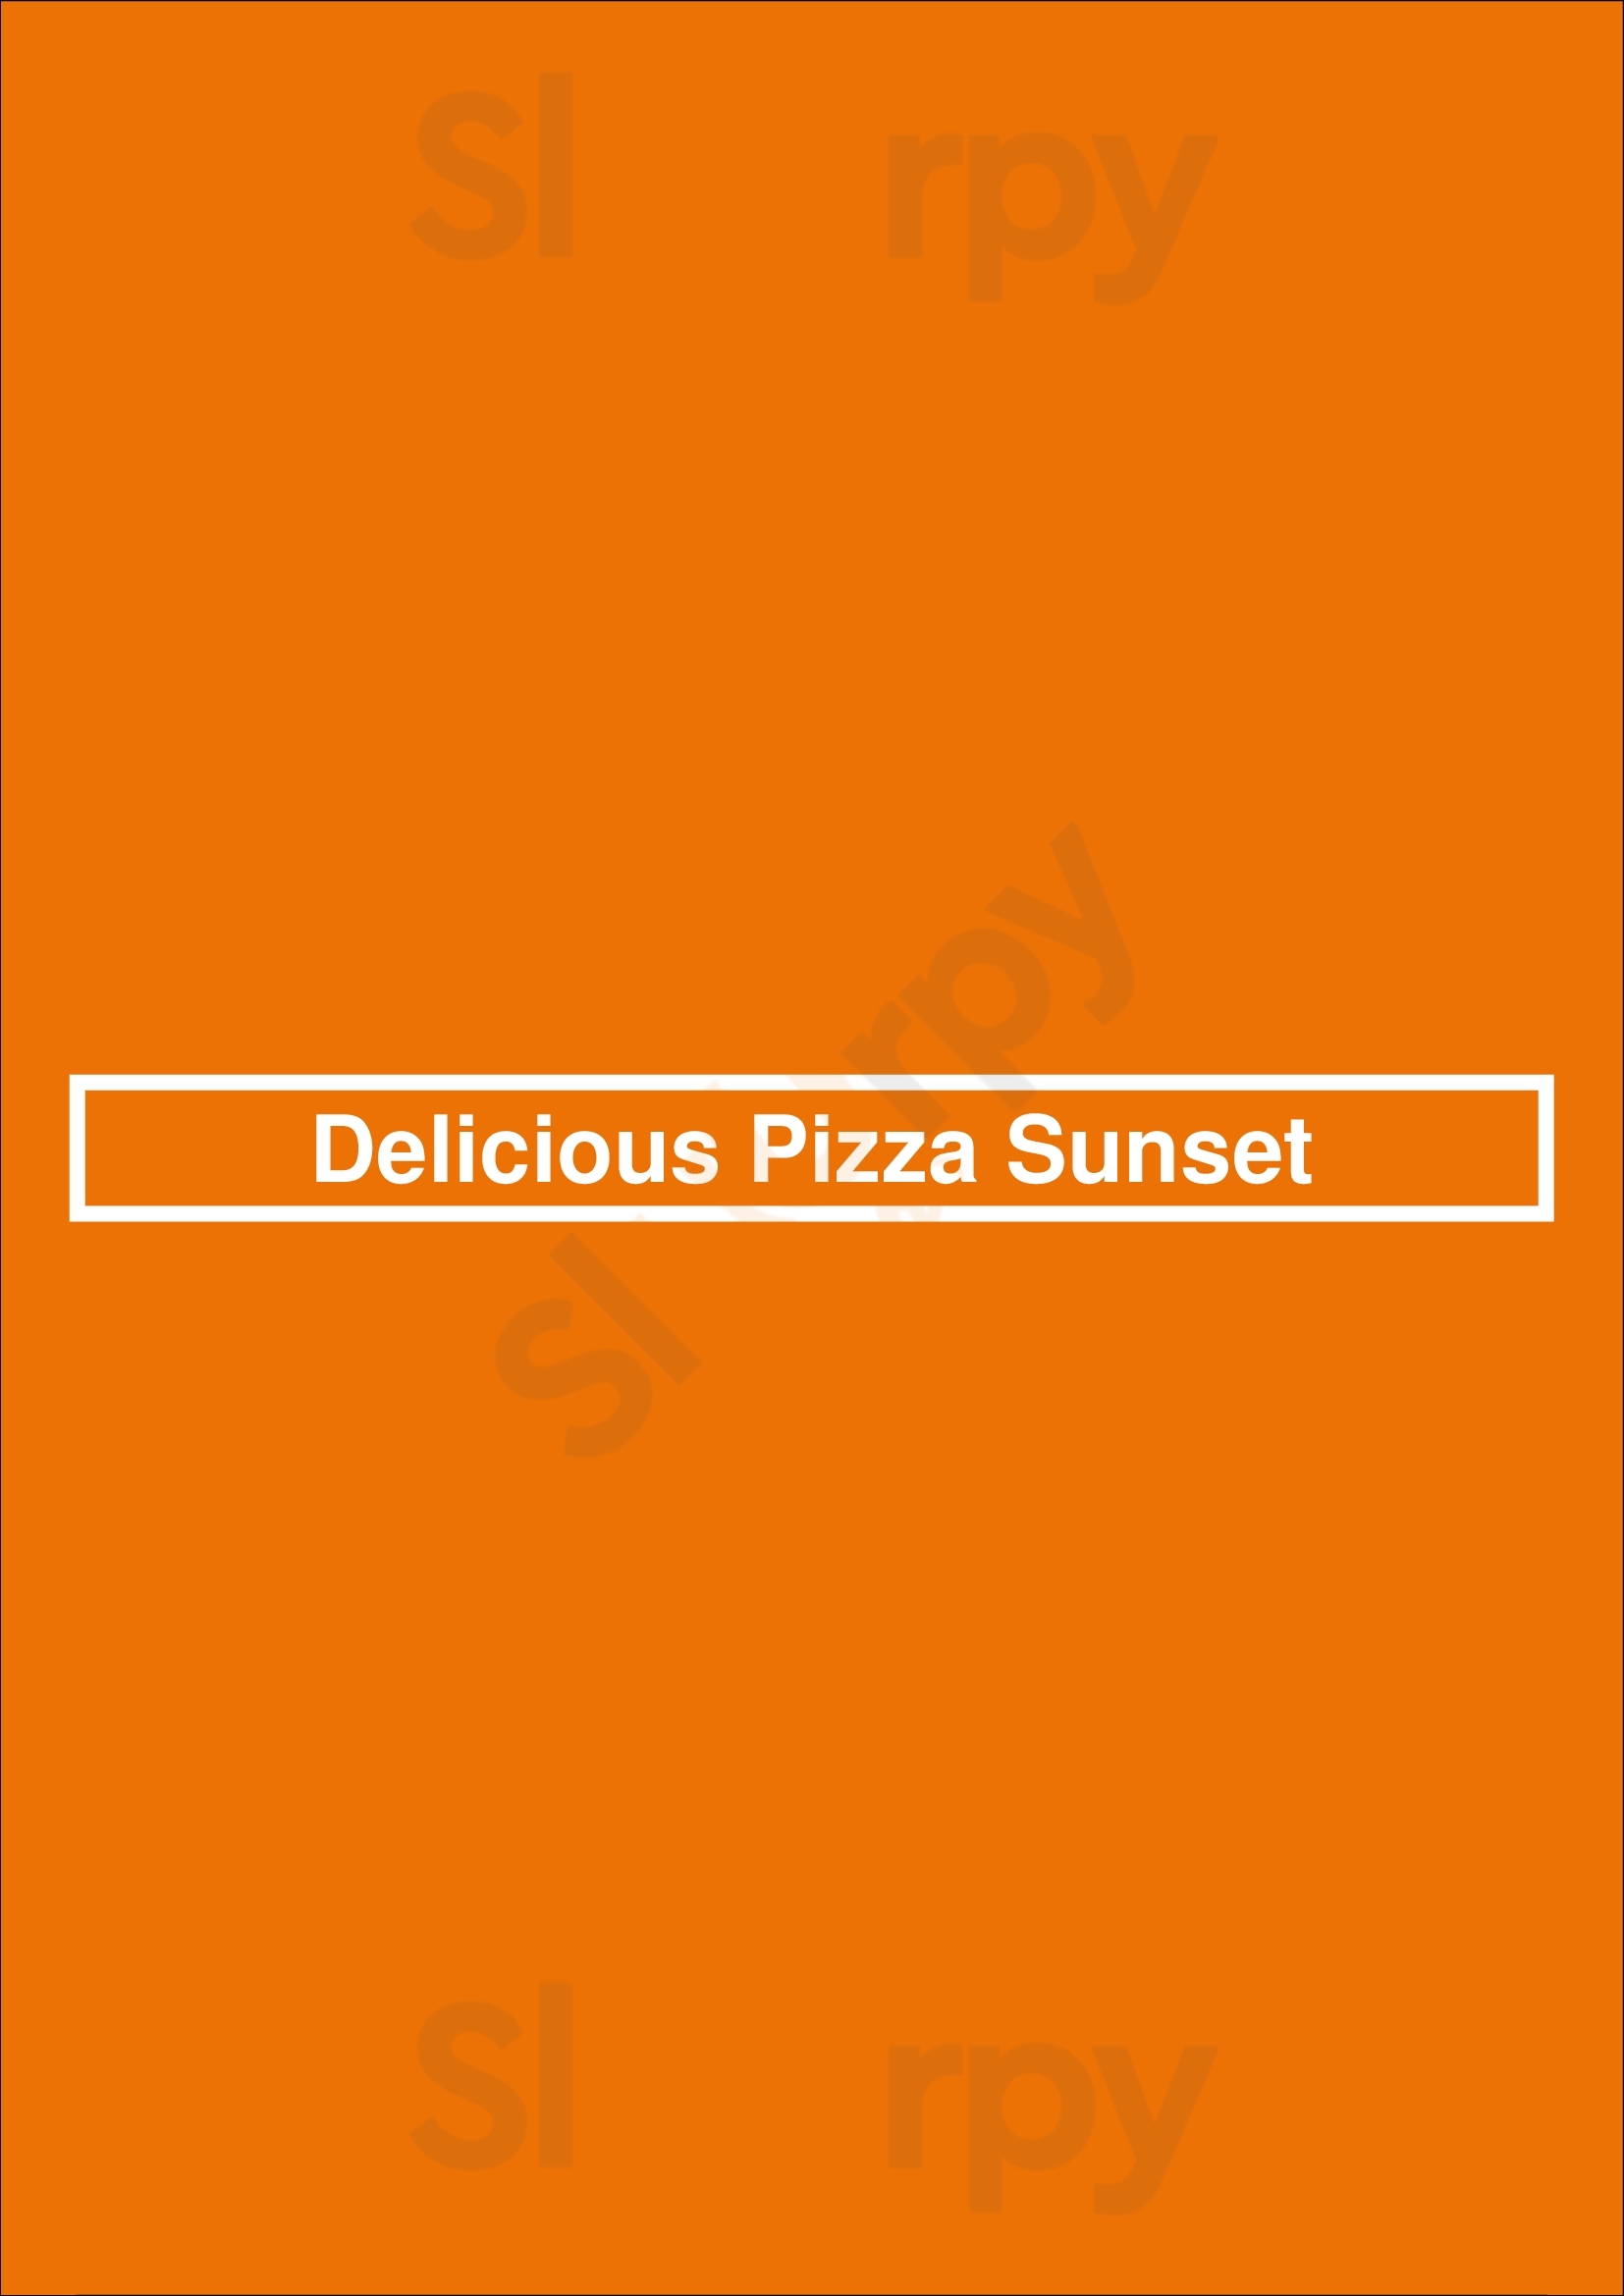 Delicious Pizza Sunset Los Angeles Menu - 1